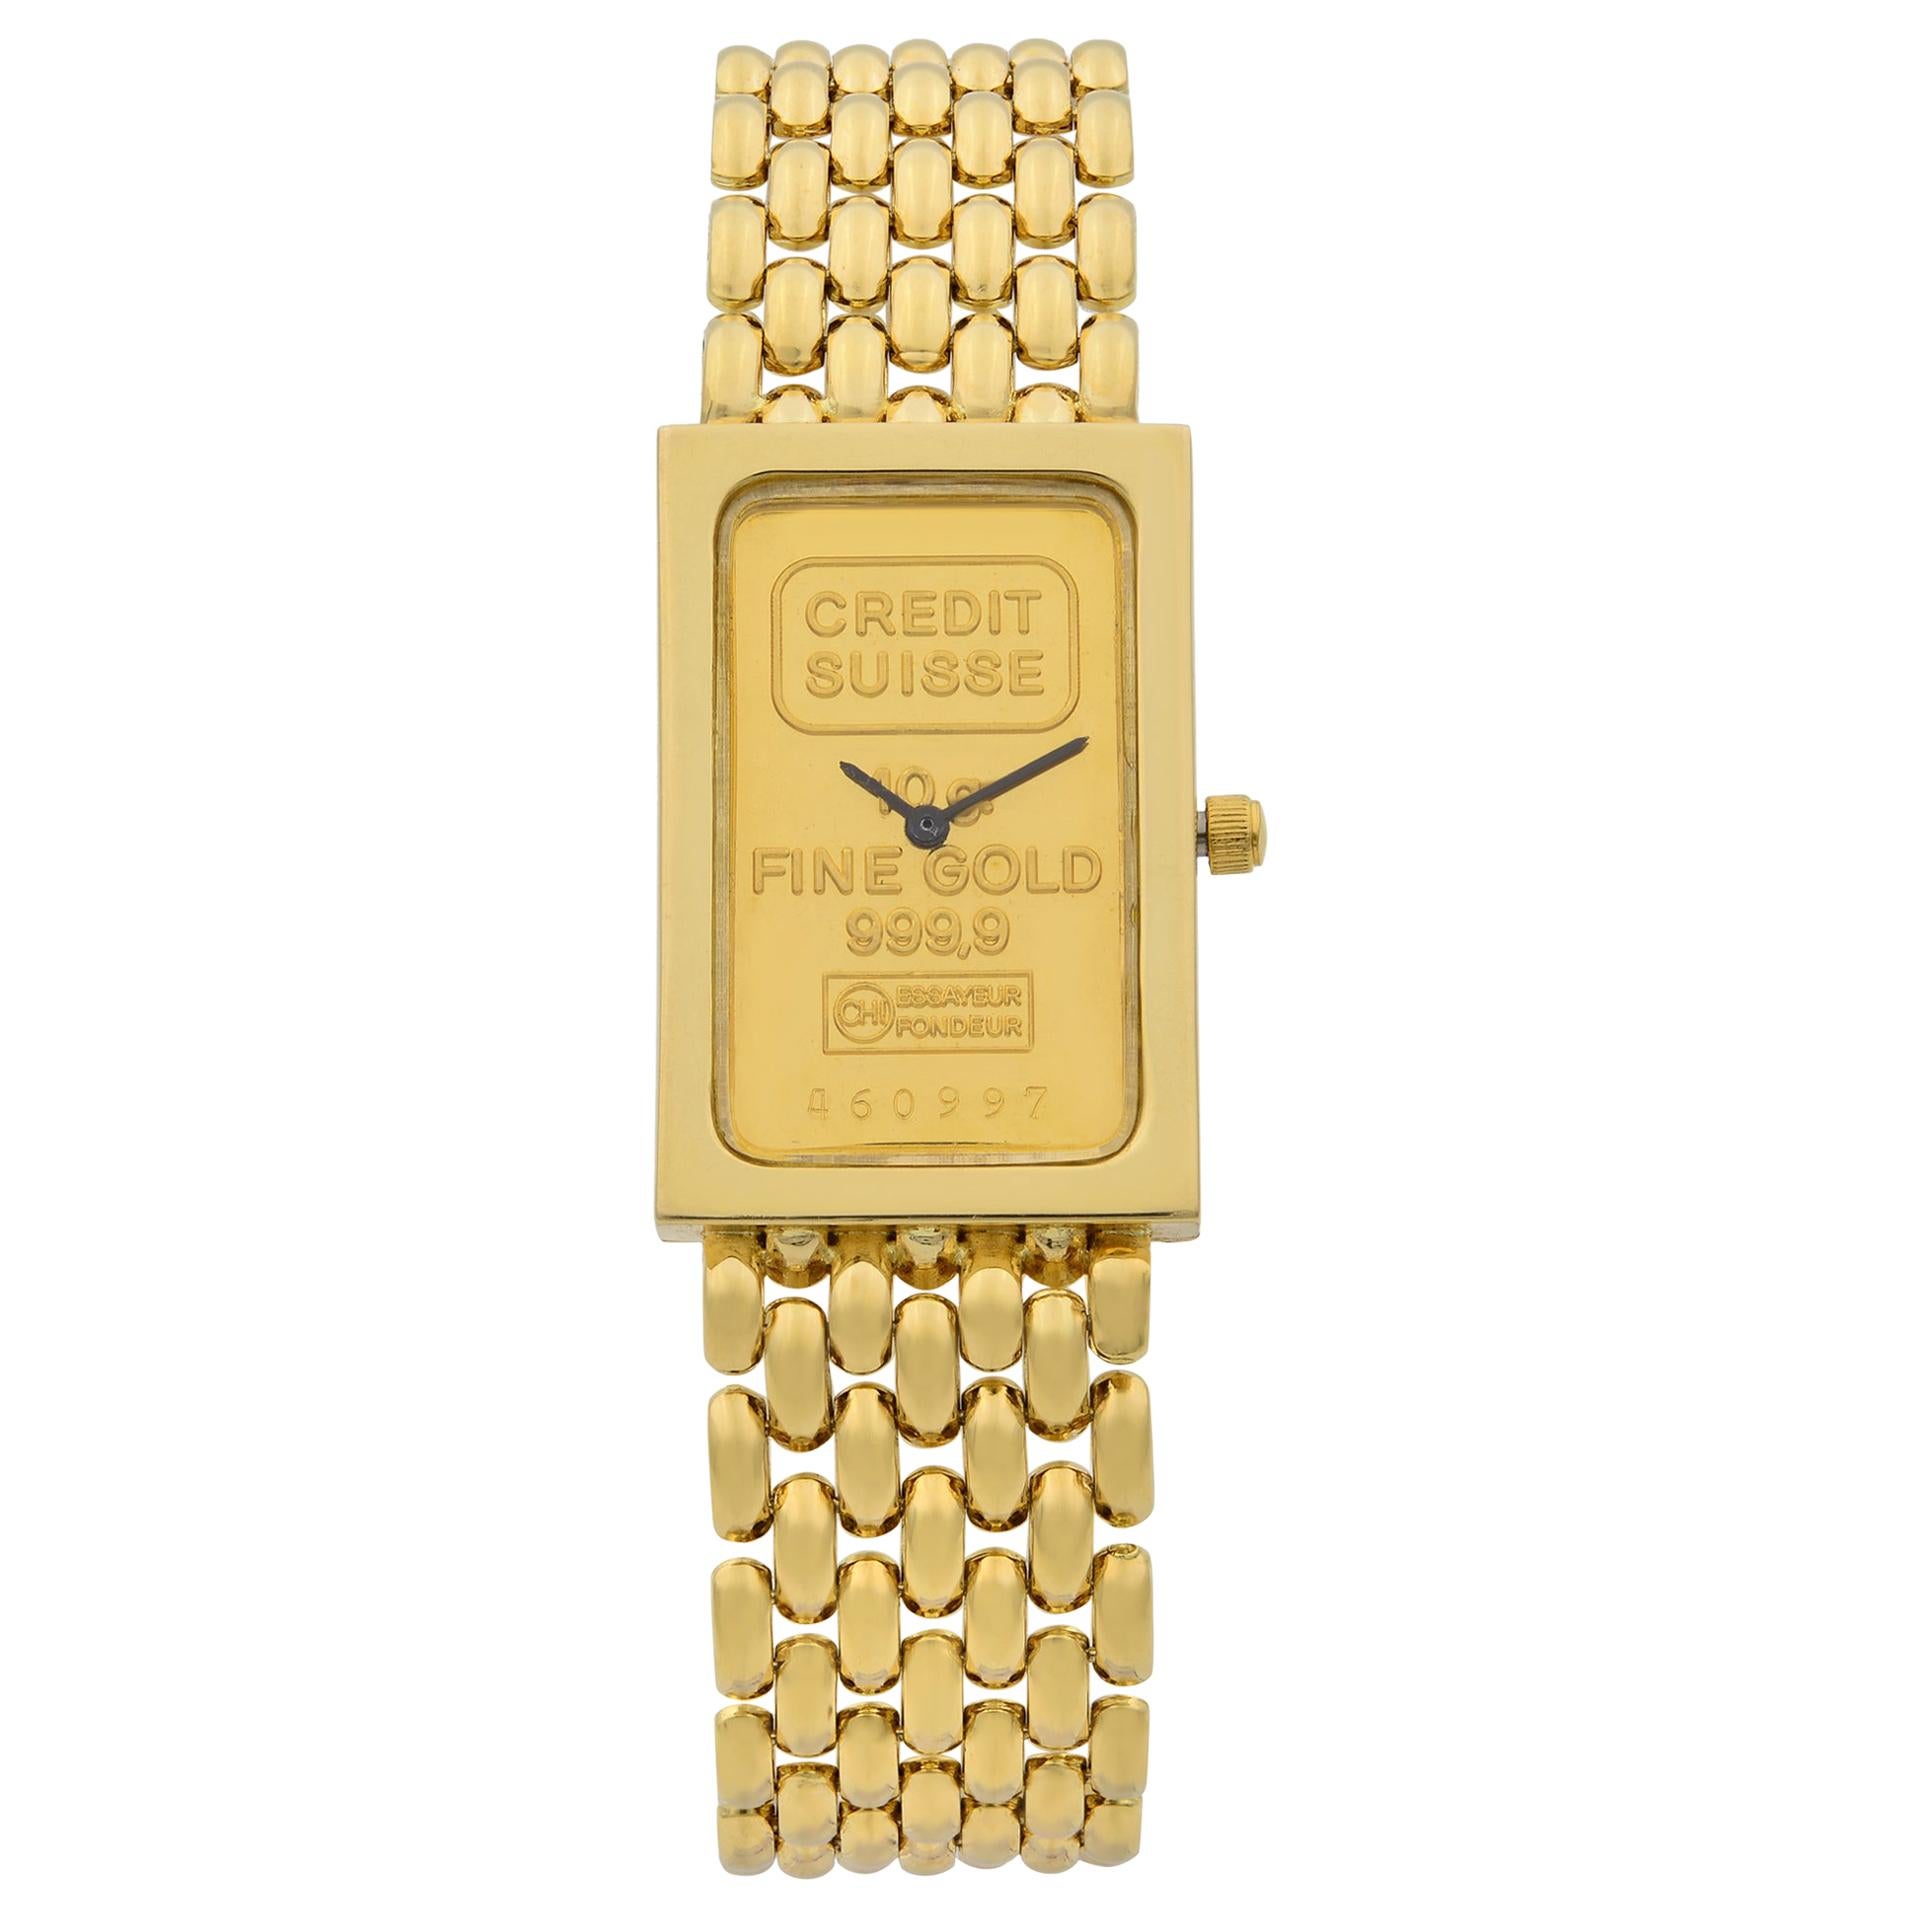 Corum Credit Suisse 10g. 999.9 Pure Gold and 18 Karat Yellow Gold Ladies Watch